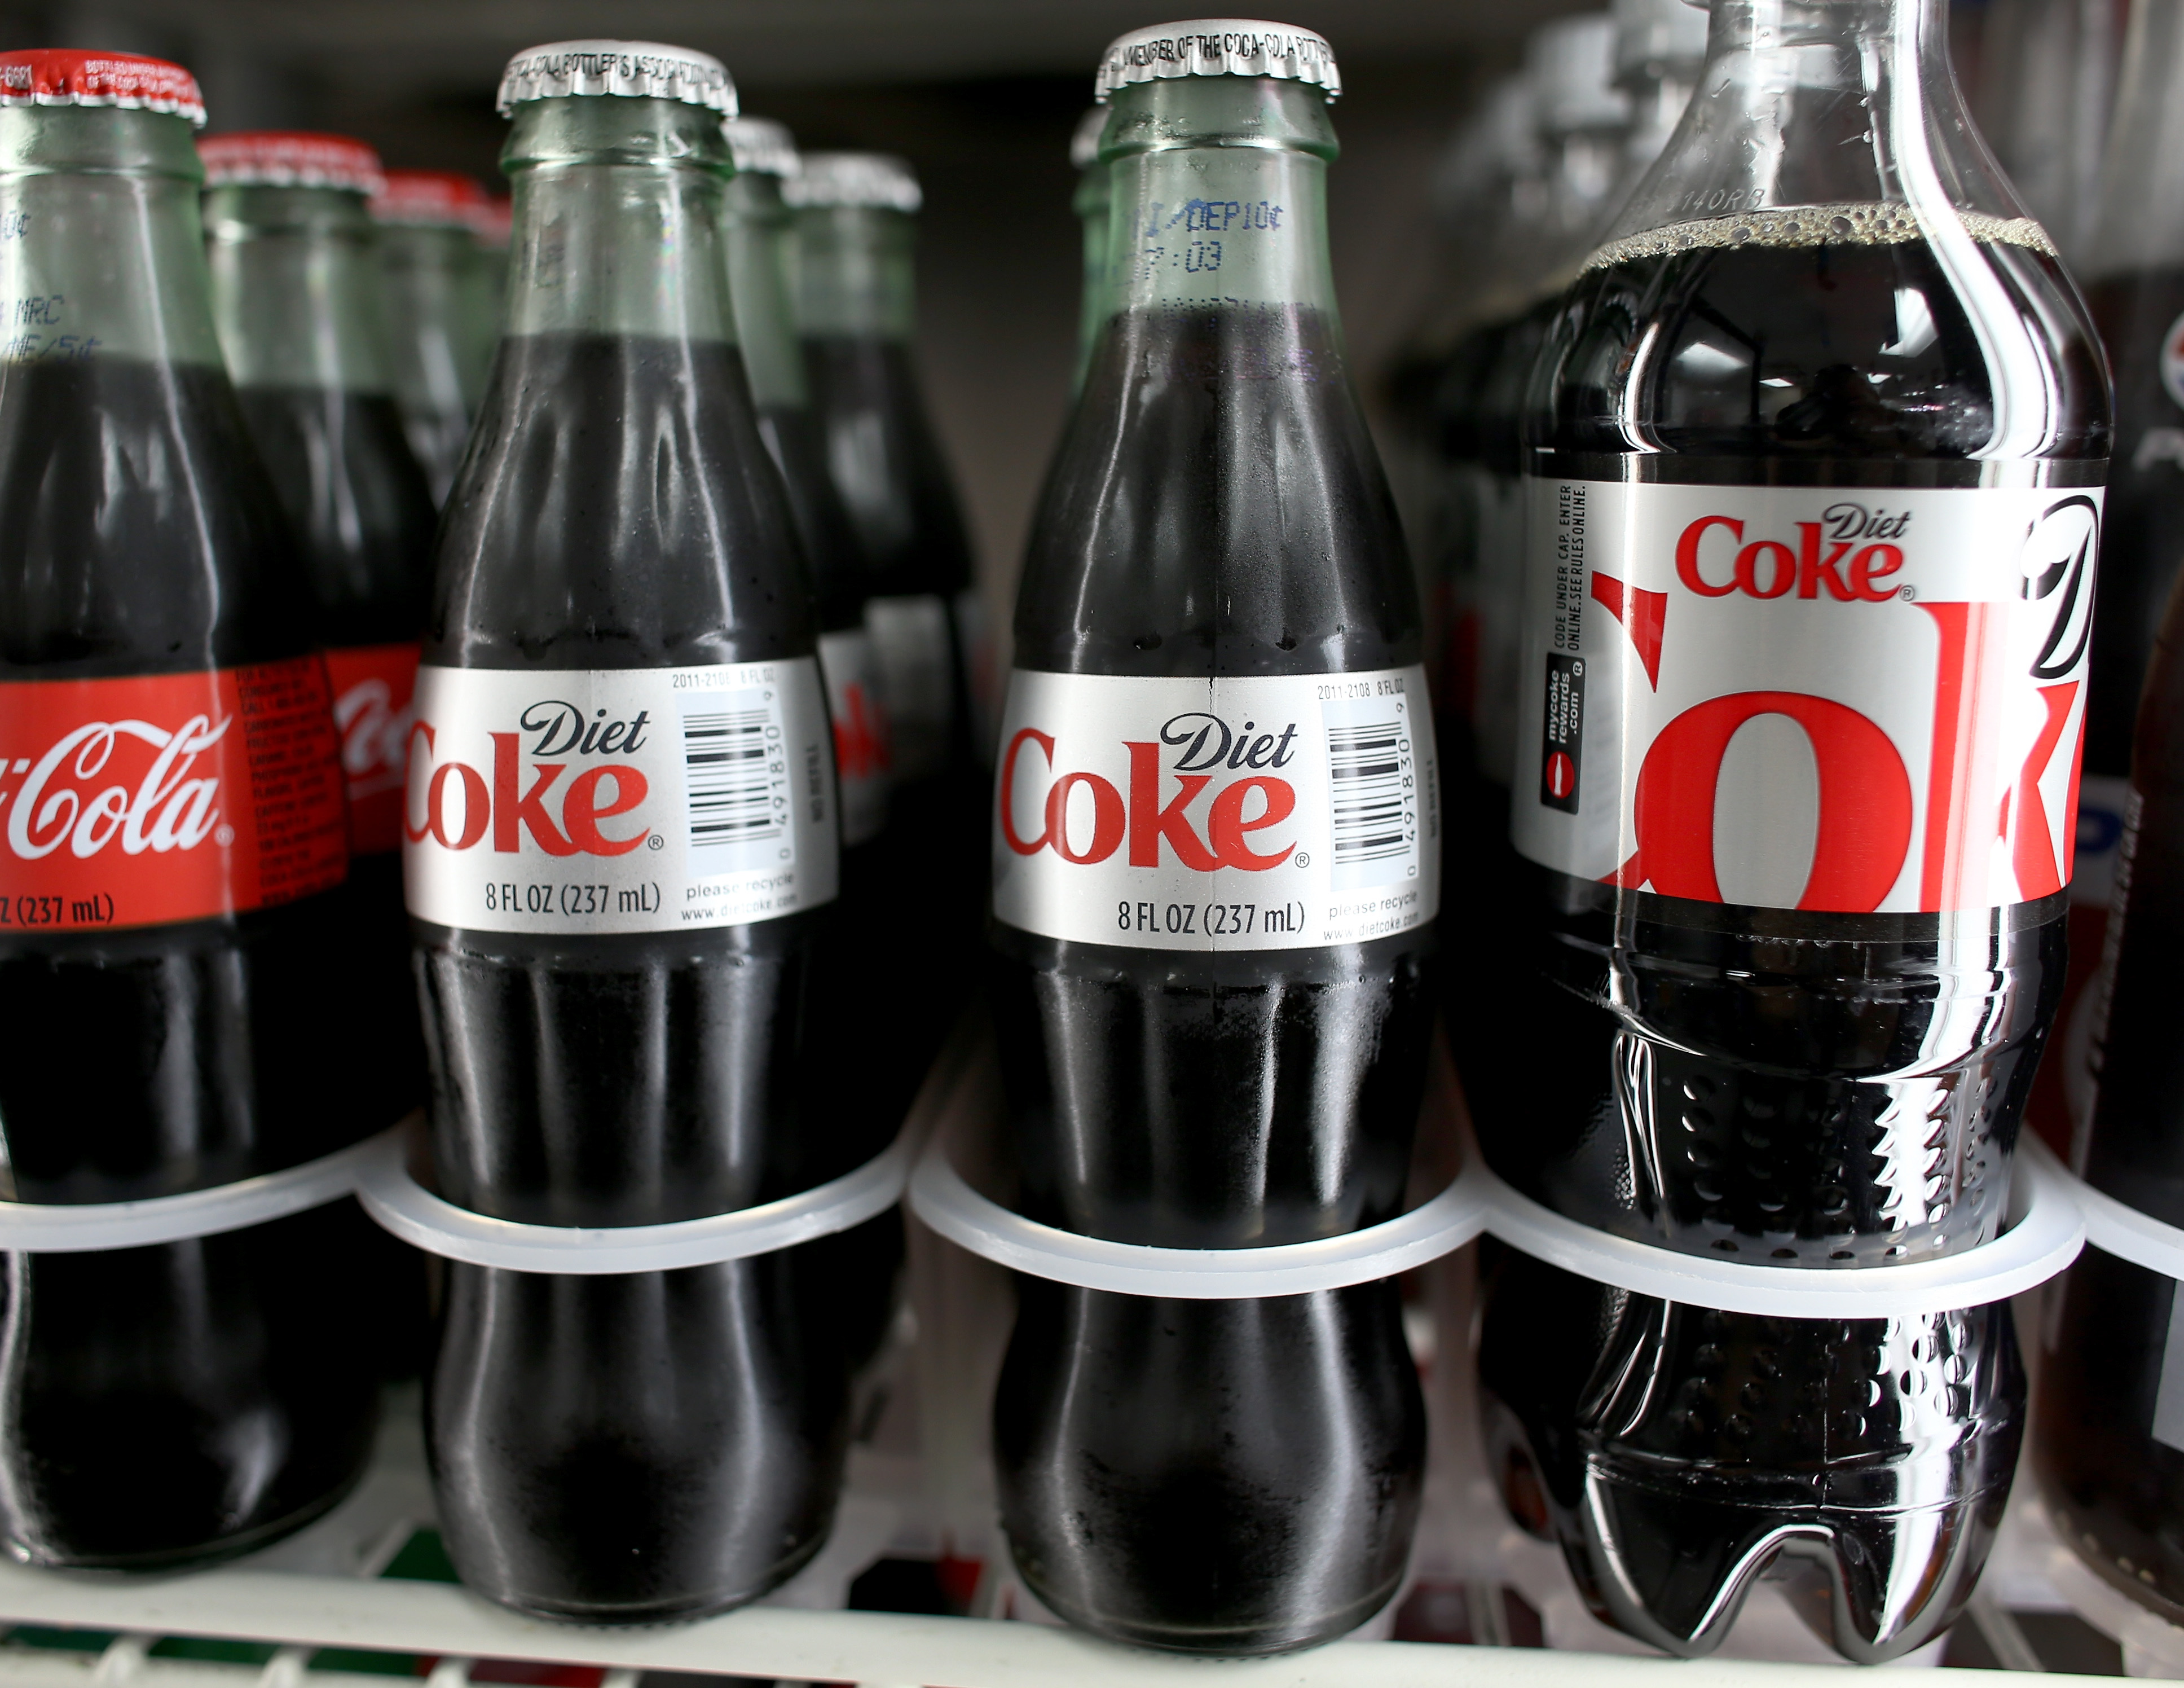 Coca-Cola eliminates Tab, its first sugar-free soft drink